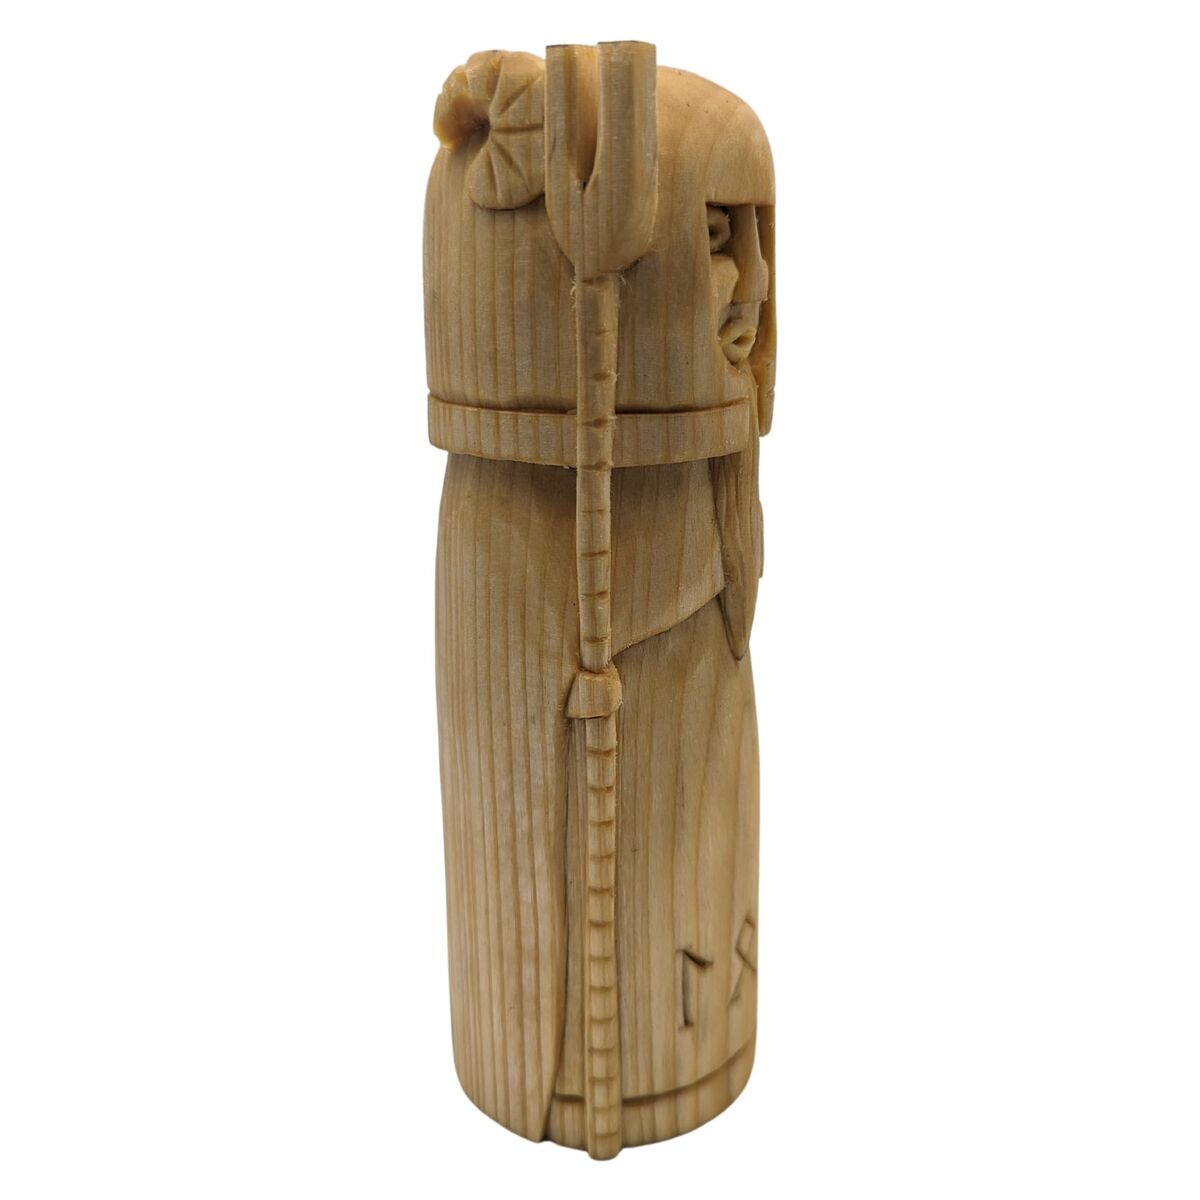 Loki wooden figurine   